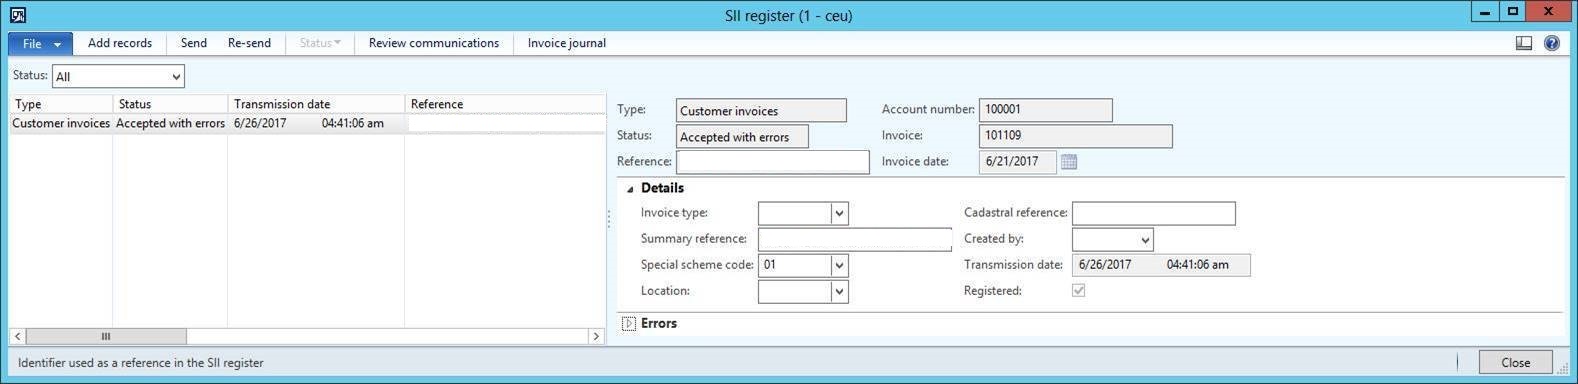 SII Register Customer invoice